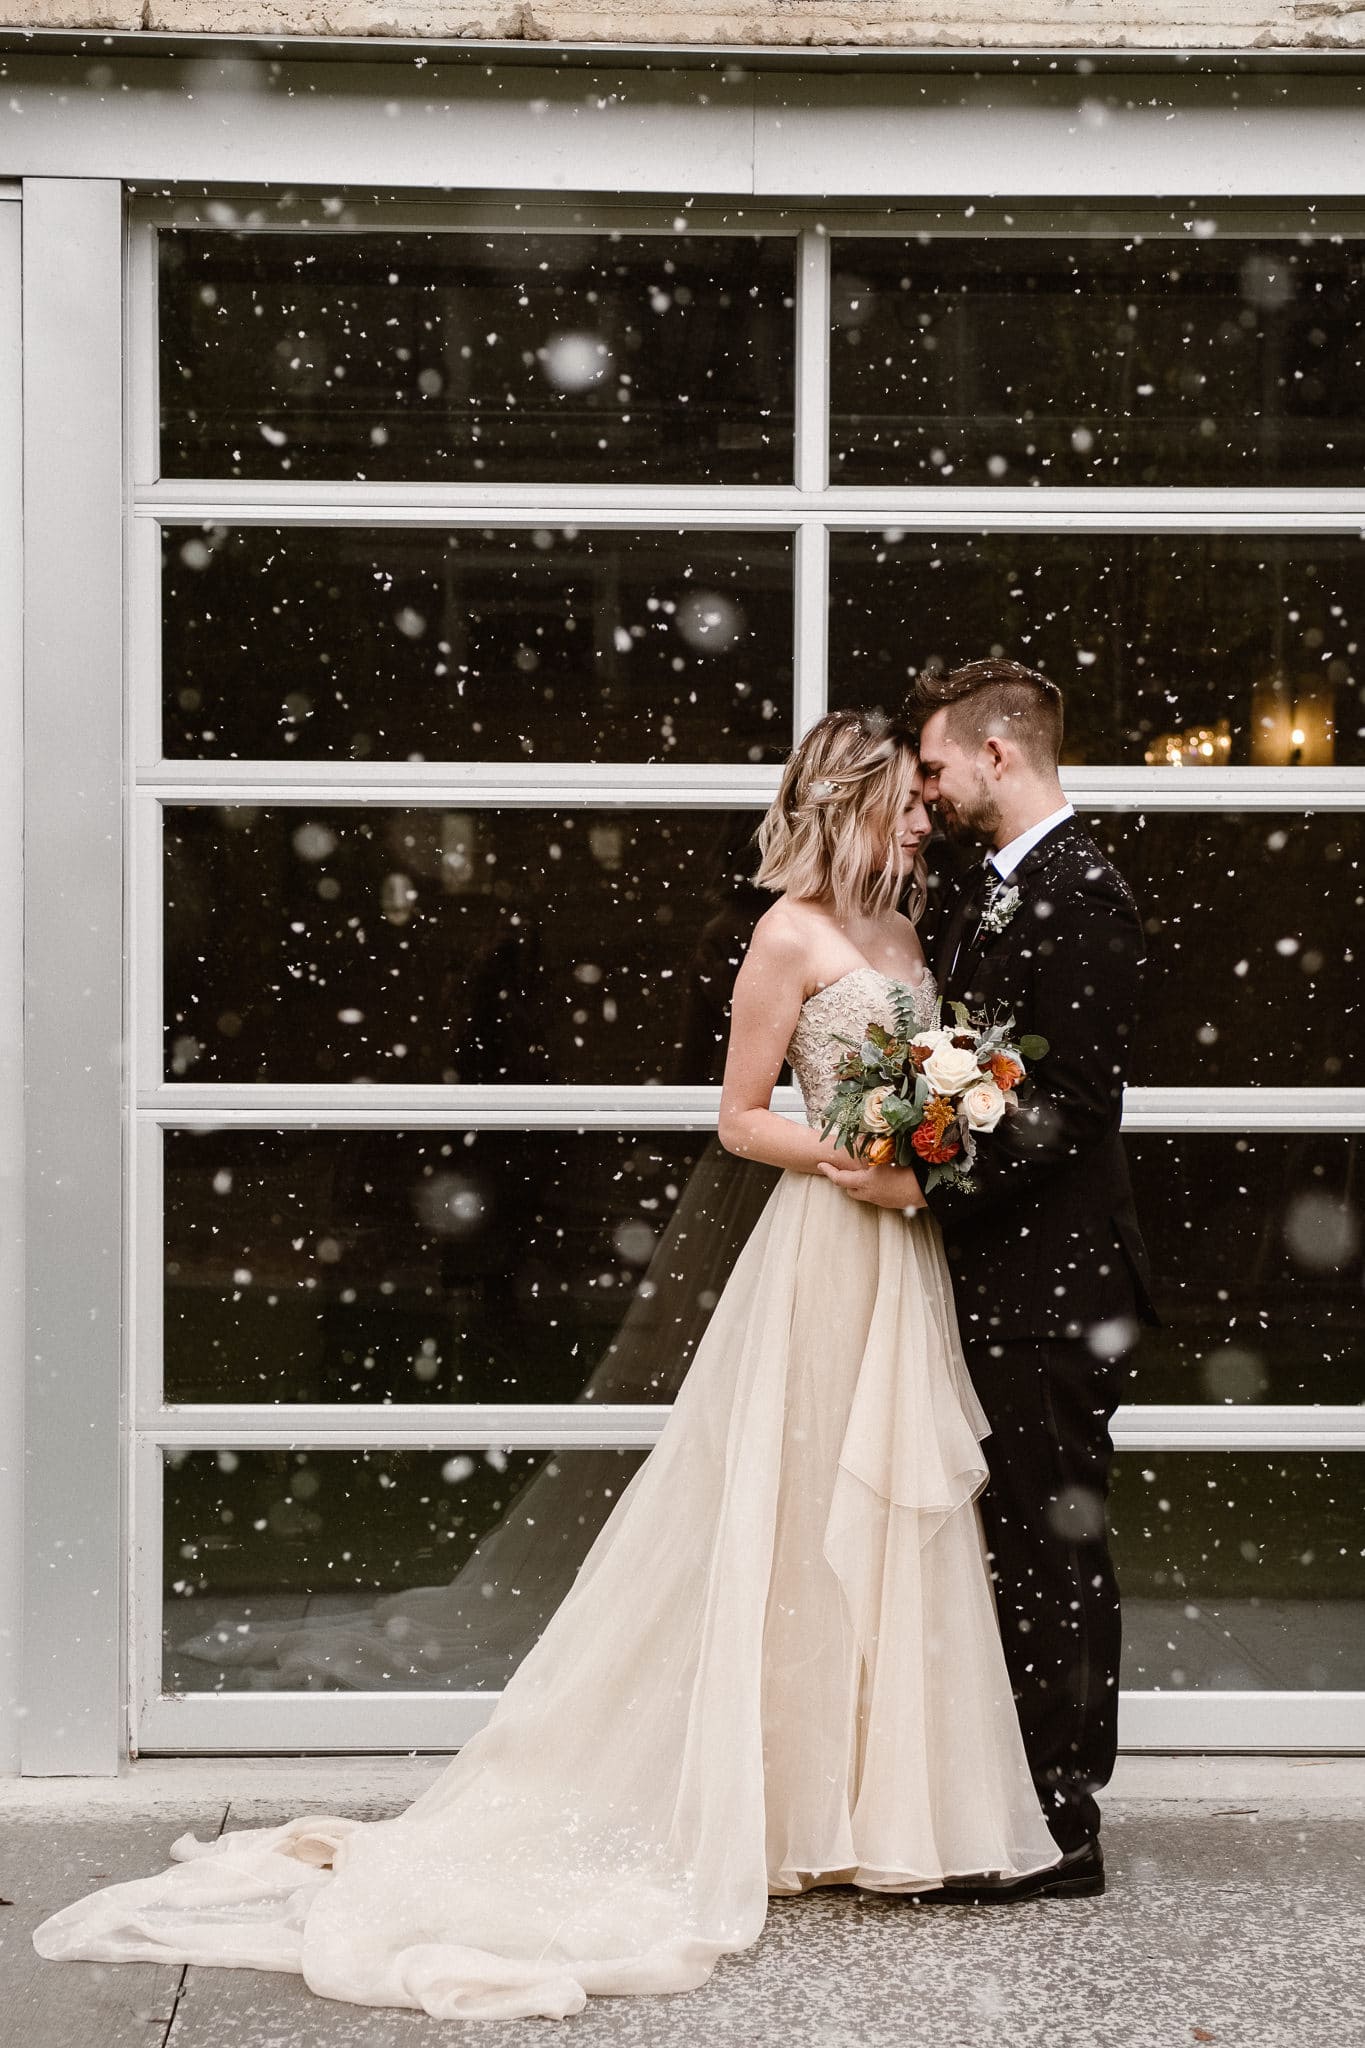 St Vrain Wedding Photographer | Longmont Wedding Photographer | Colorado Winter Wedding Photographer, Colorado industrial chic wedding, bride and groom portraits in snow